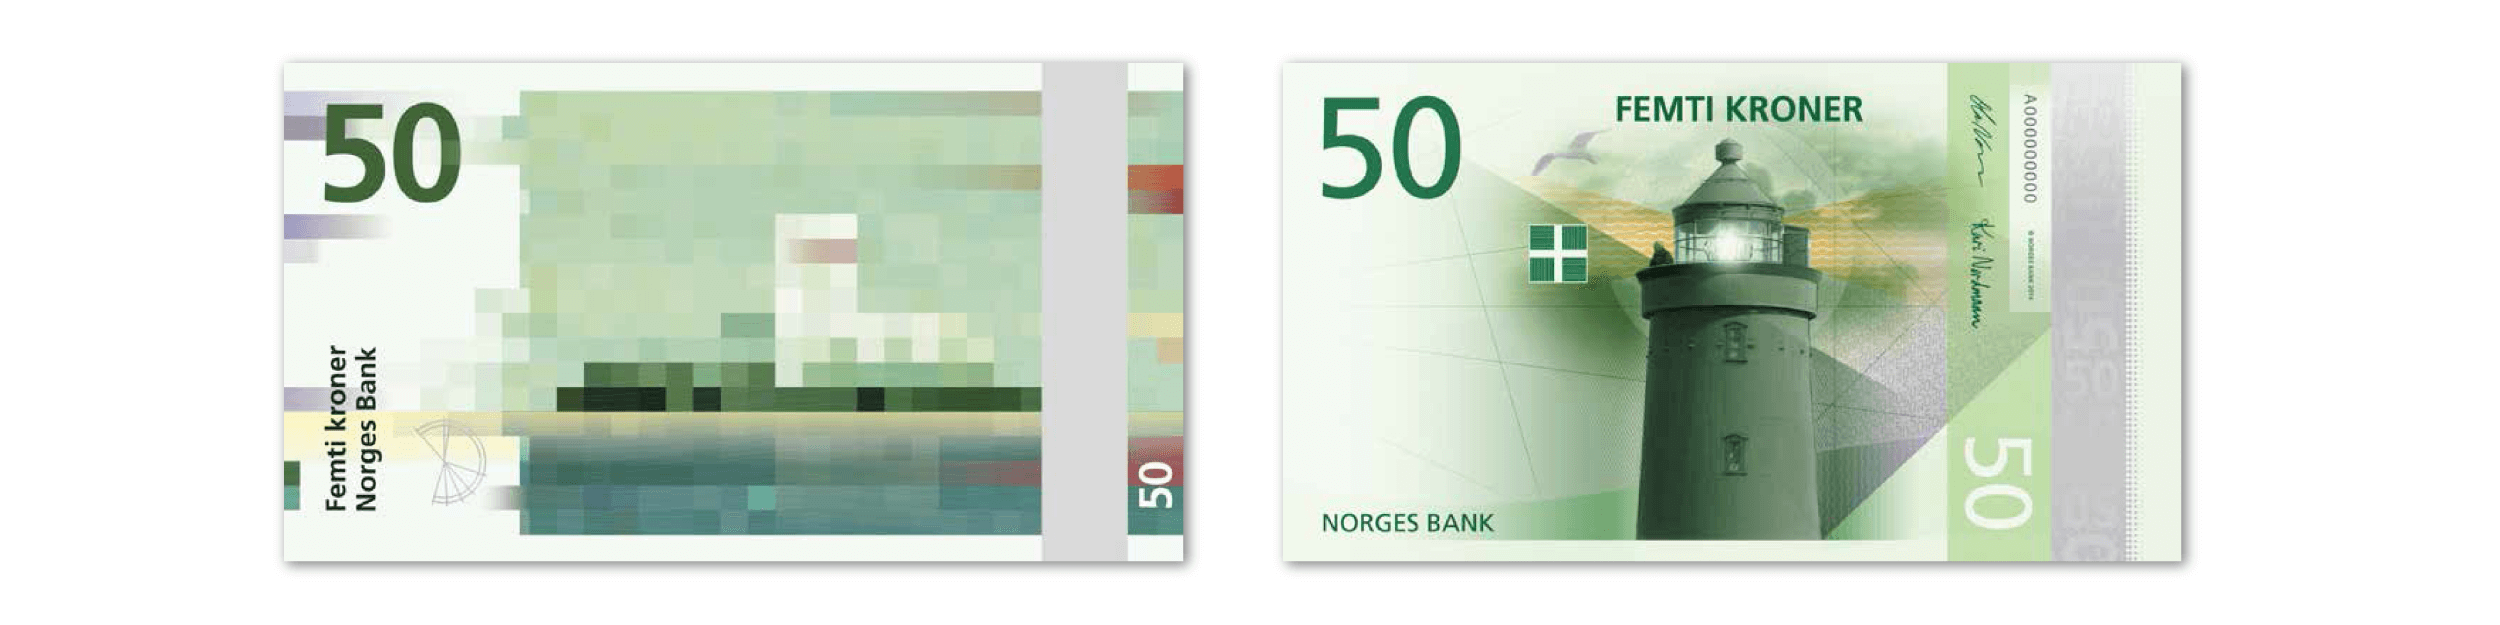 Norway Currency Redesign_50-kroner